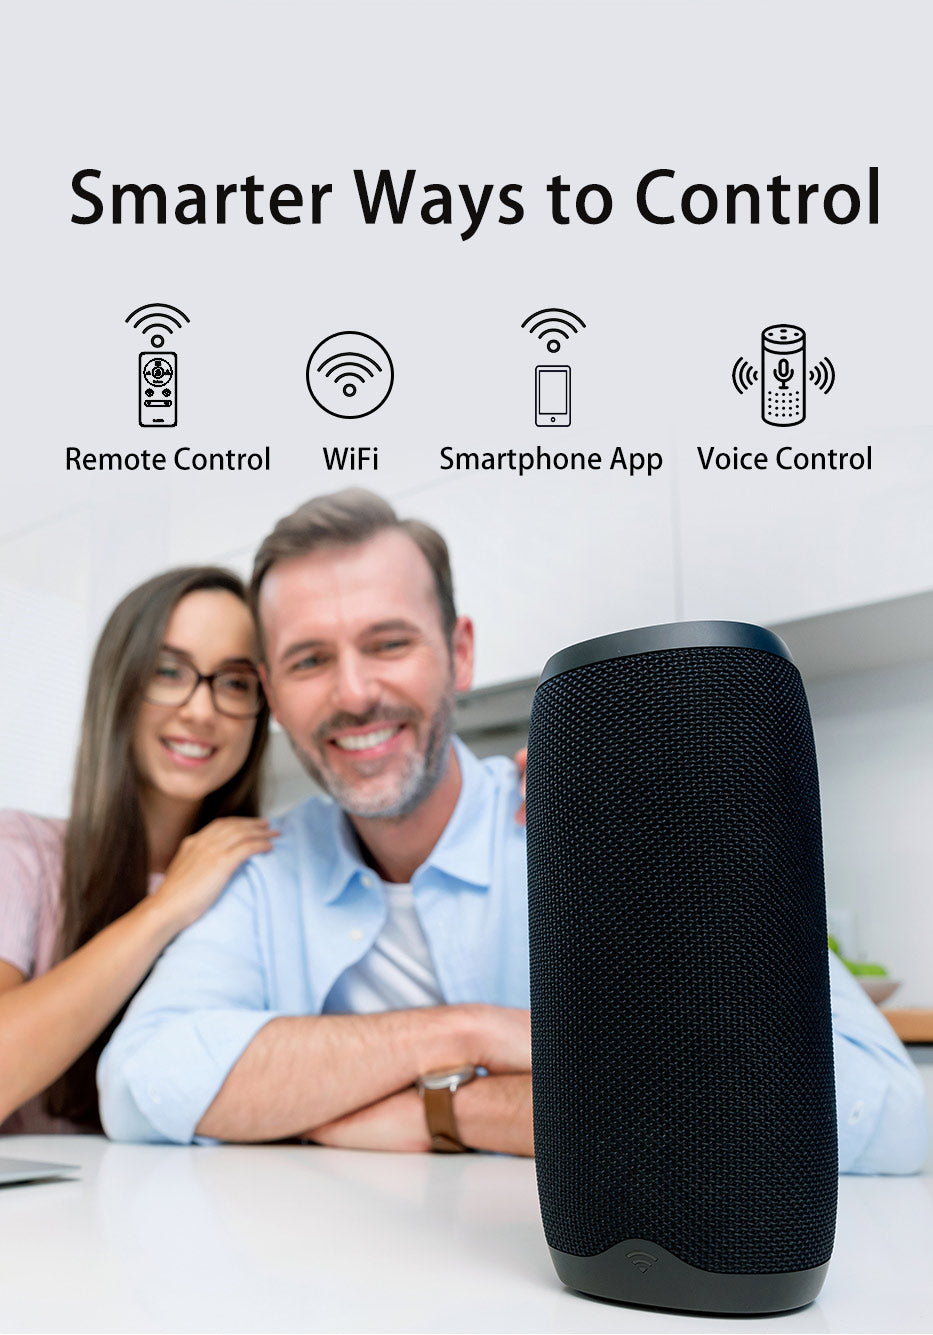 Carro-Smafan-Antrim-52''-Indoor-Outdoor-Smart-Ceiling-Fan-with-Remote-Smart-Features-Convenient-Control-Voice-Assistant-Wifi-Phone-App (2)